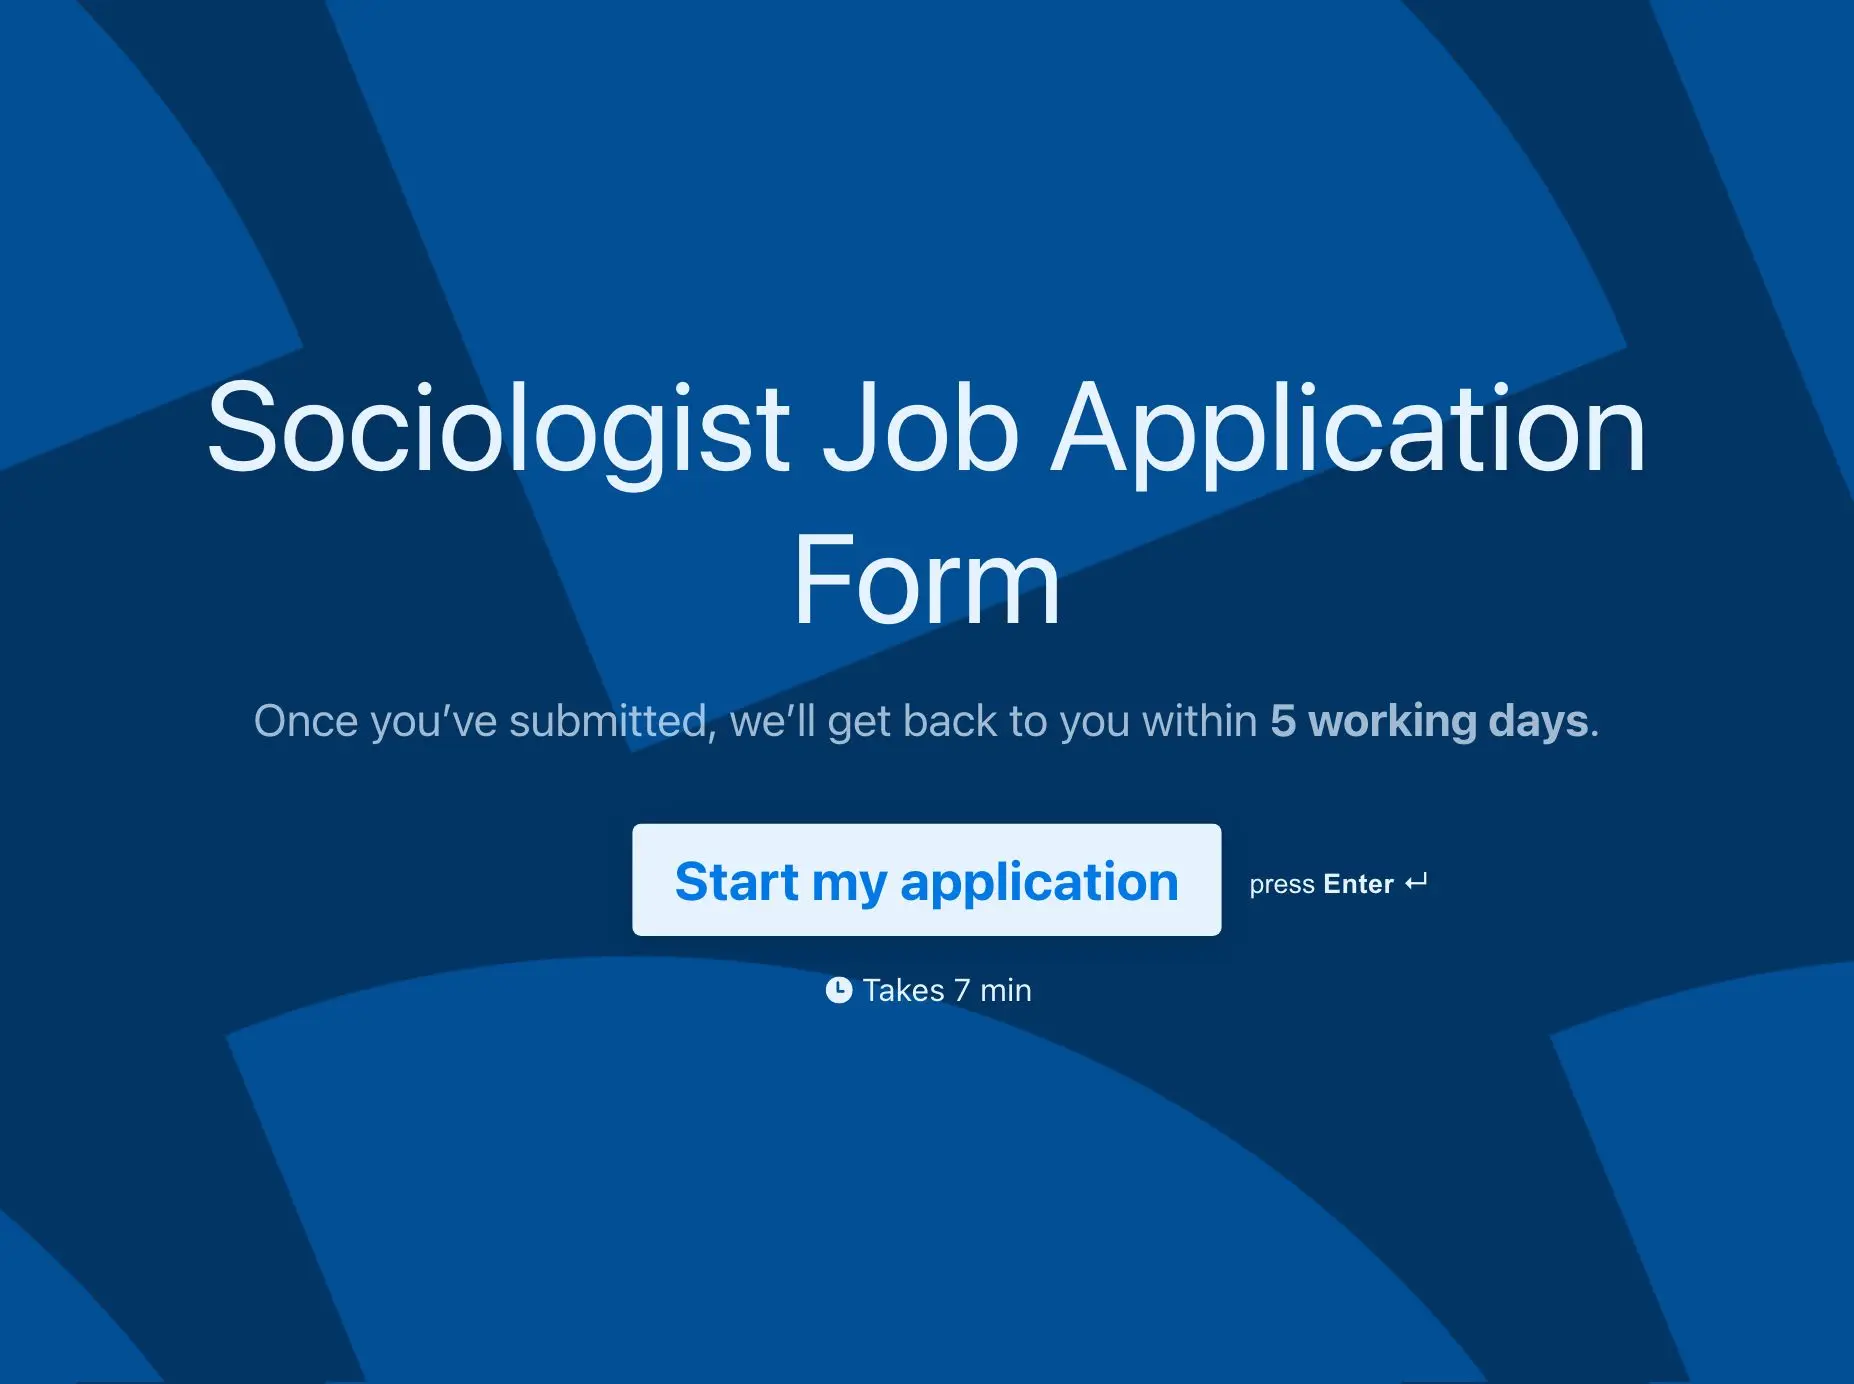 Sociologist Job Application Form Template Hero